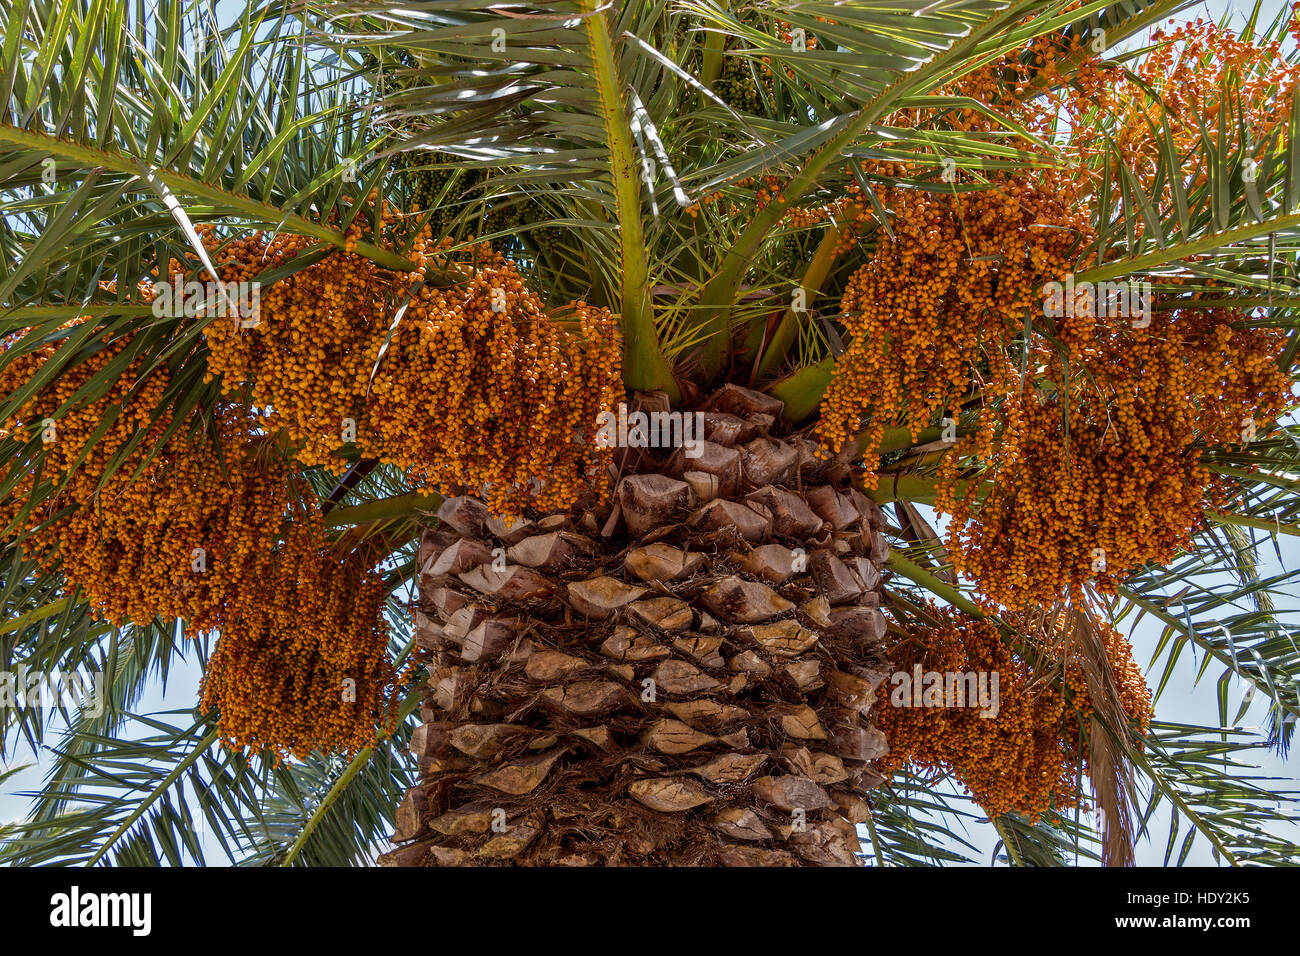 Ripe Fruit Hanging From Date Palm Santa Cruz La Palma Spain Stock Photo